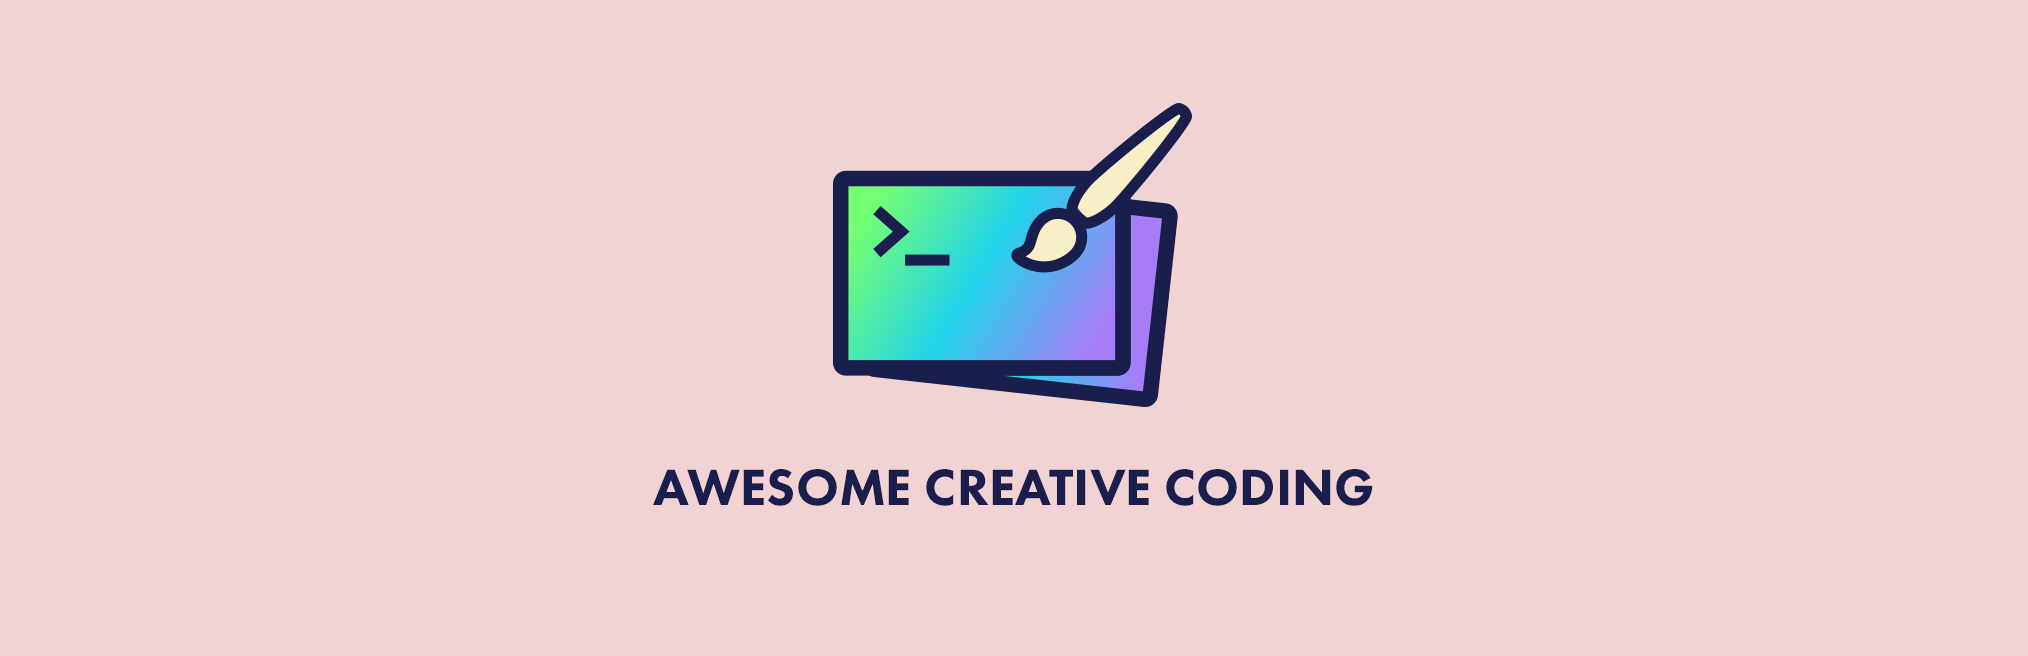 awesome-creative-coding